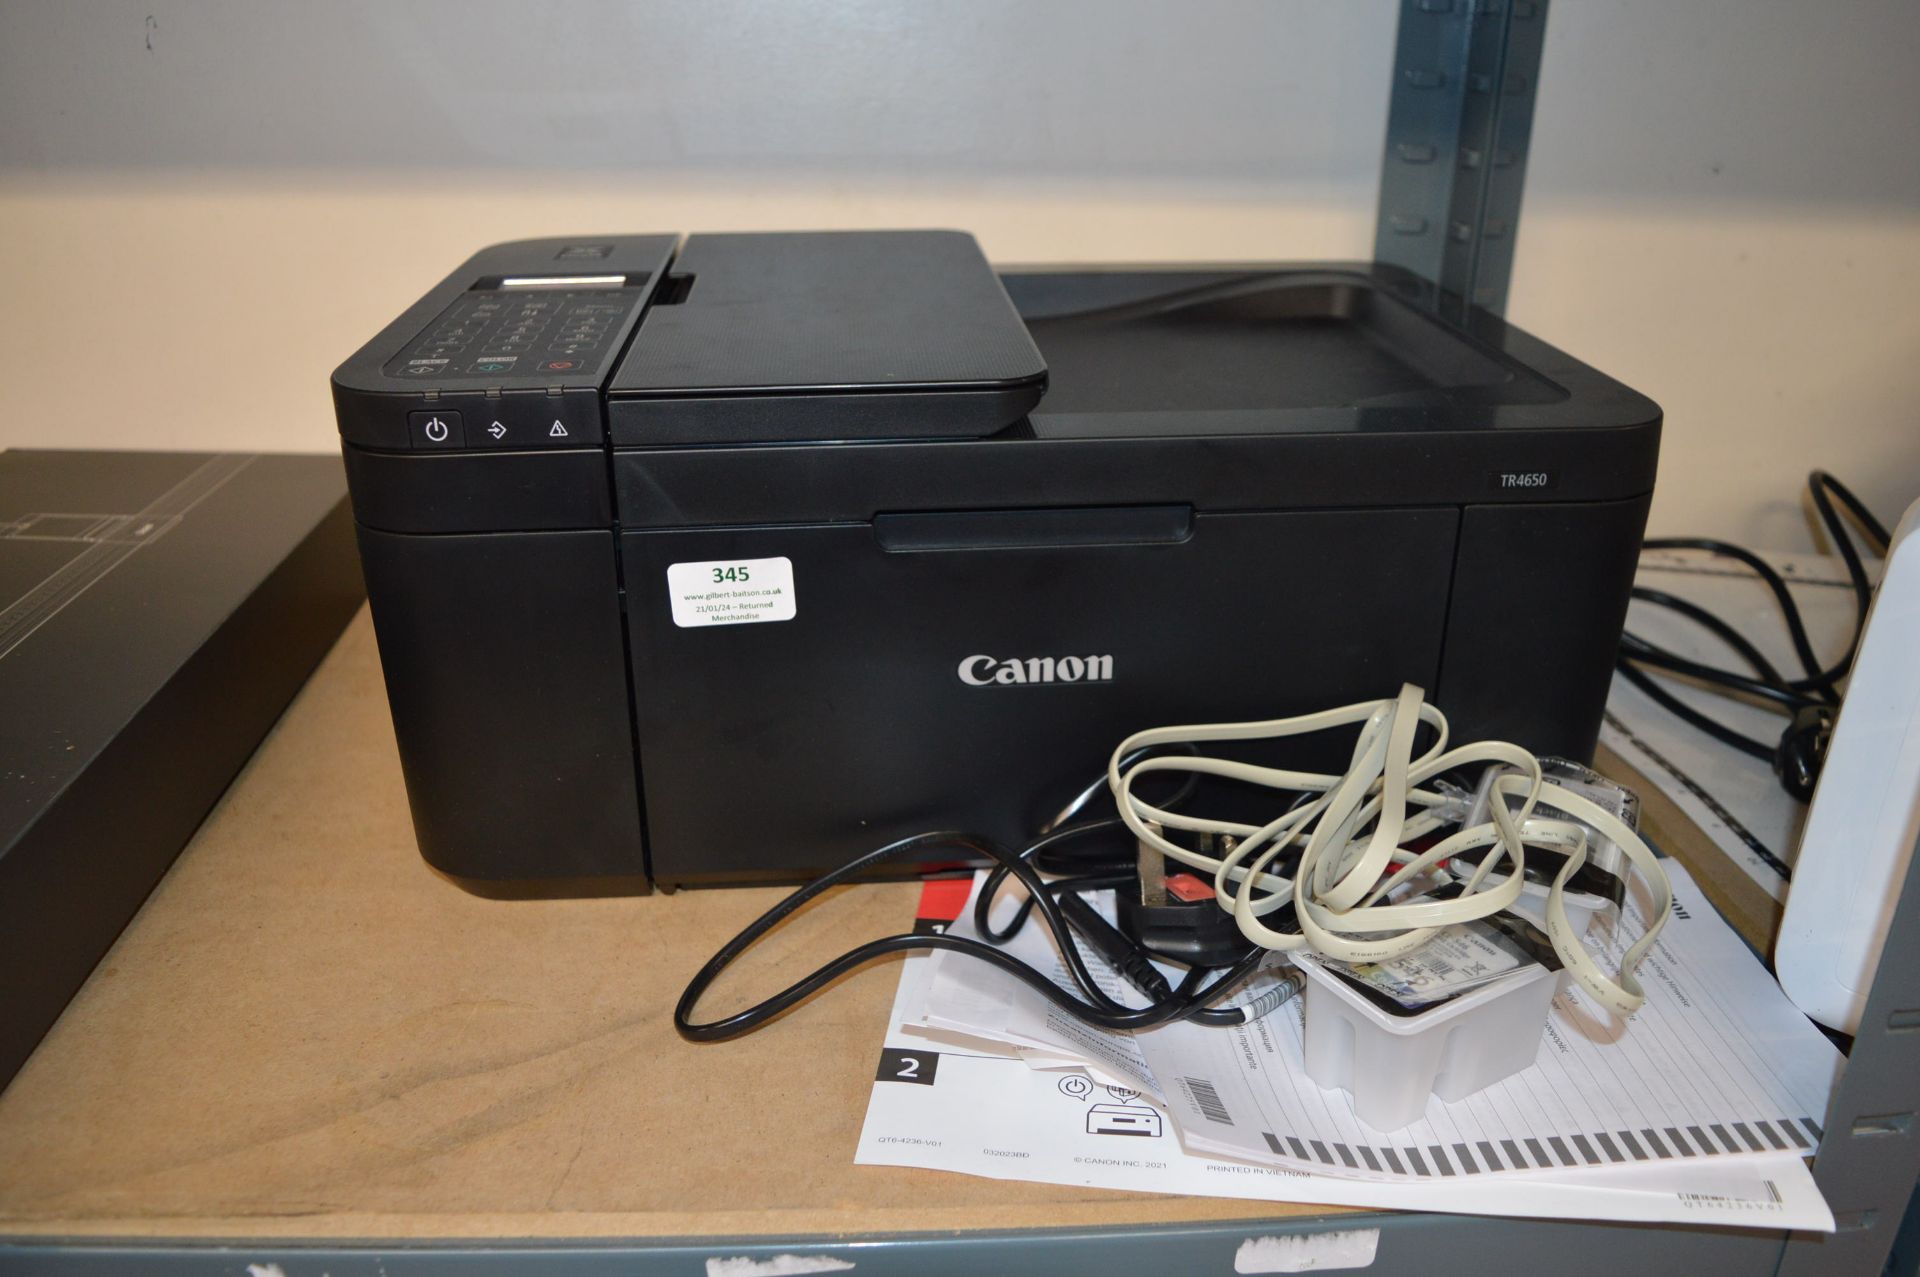 *Canon TR4650 Printer